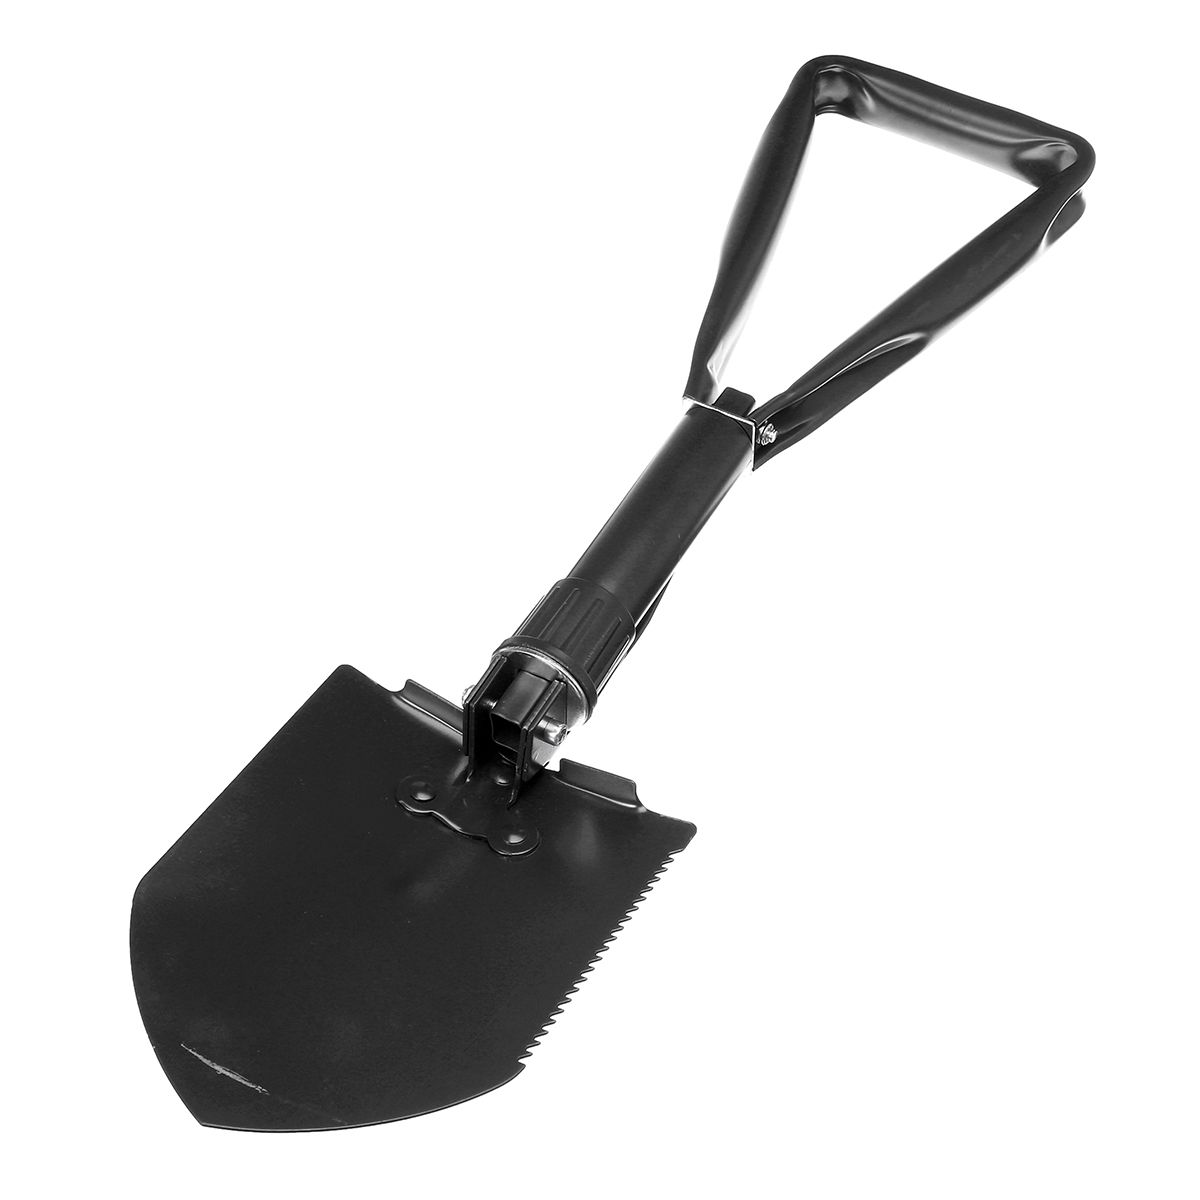 Lightweight-Survival-Folding-Shovel-Multi-Purpose-Folding-Shovel-Entrenching-Tool-Camping-Shovel-1426841